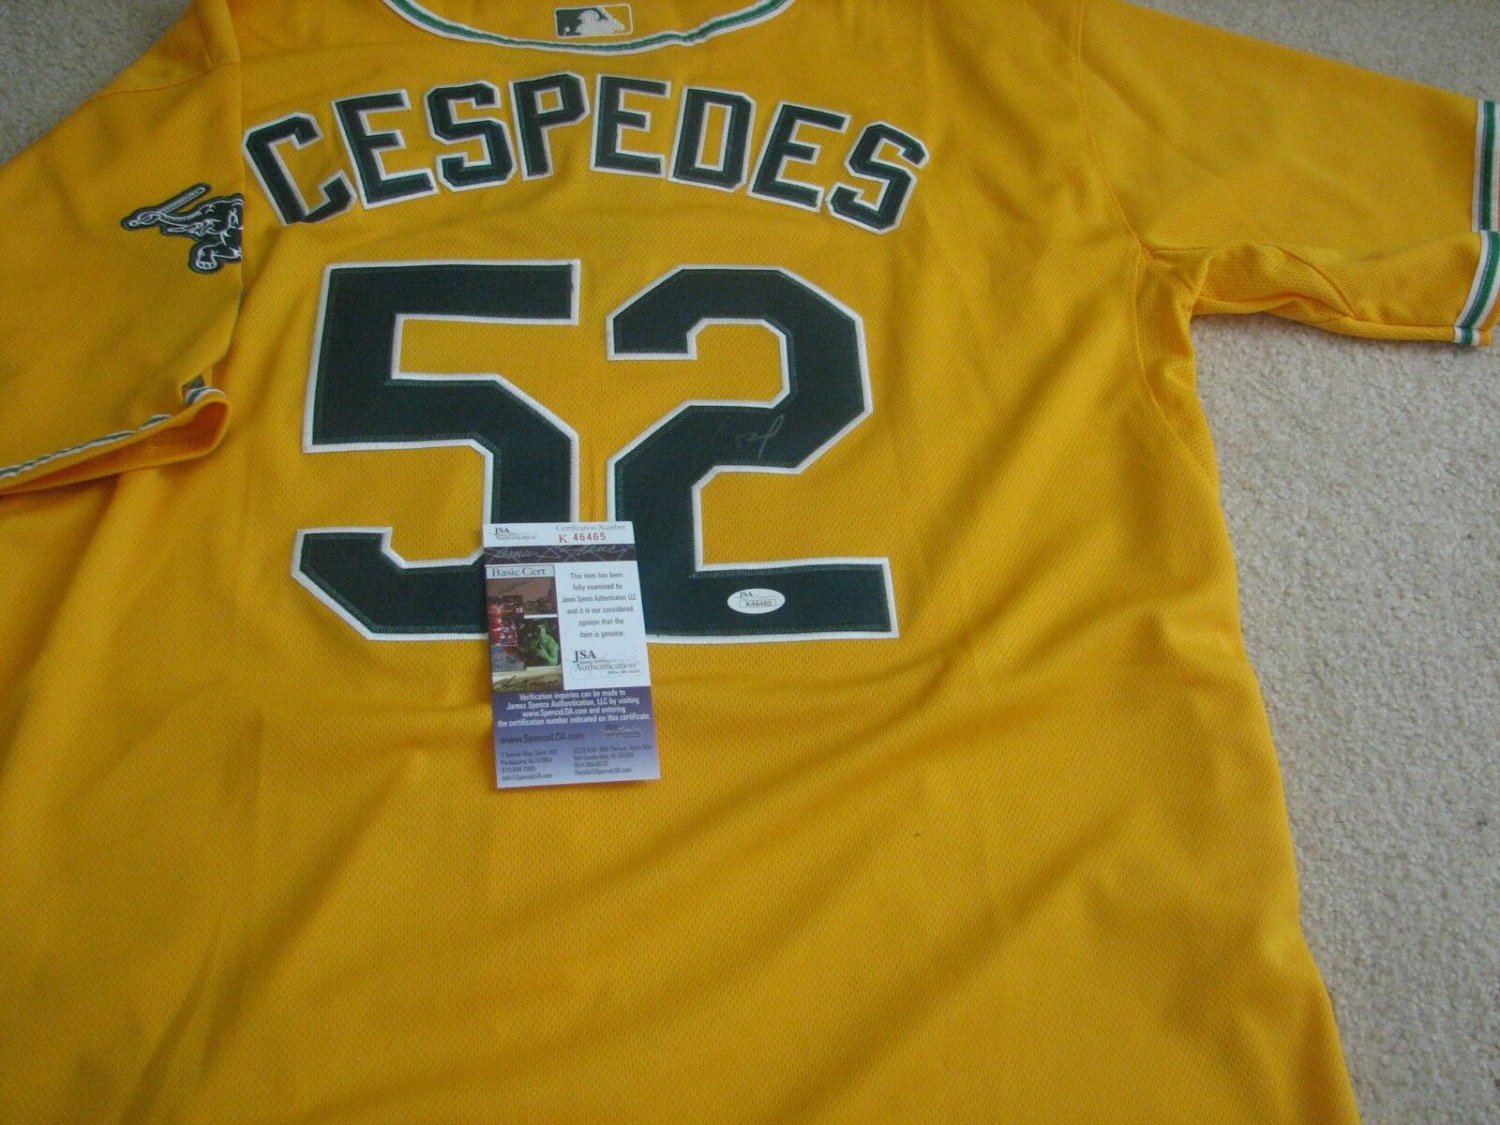 cespedes a's jersey